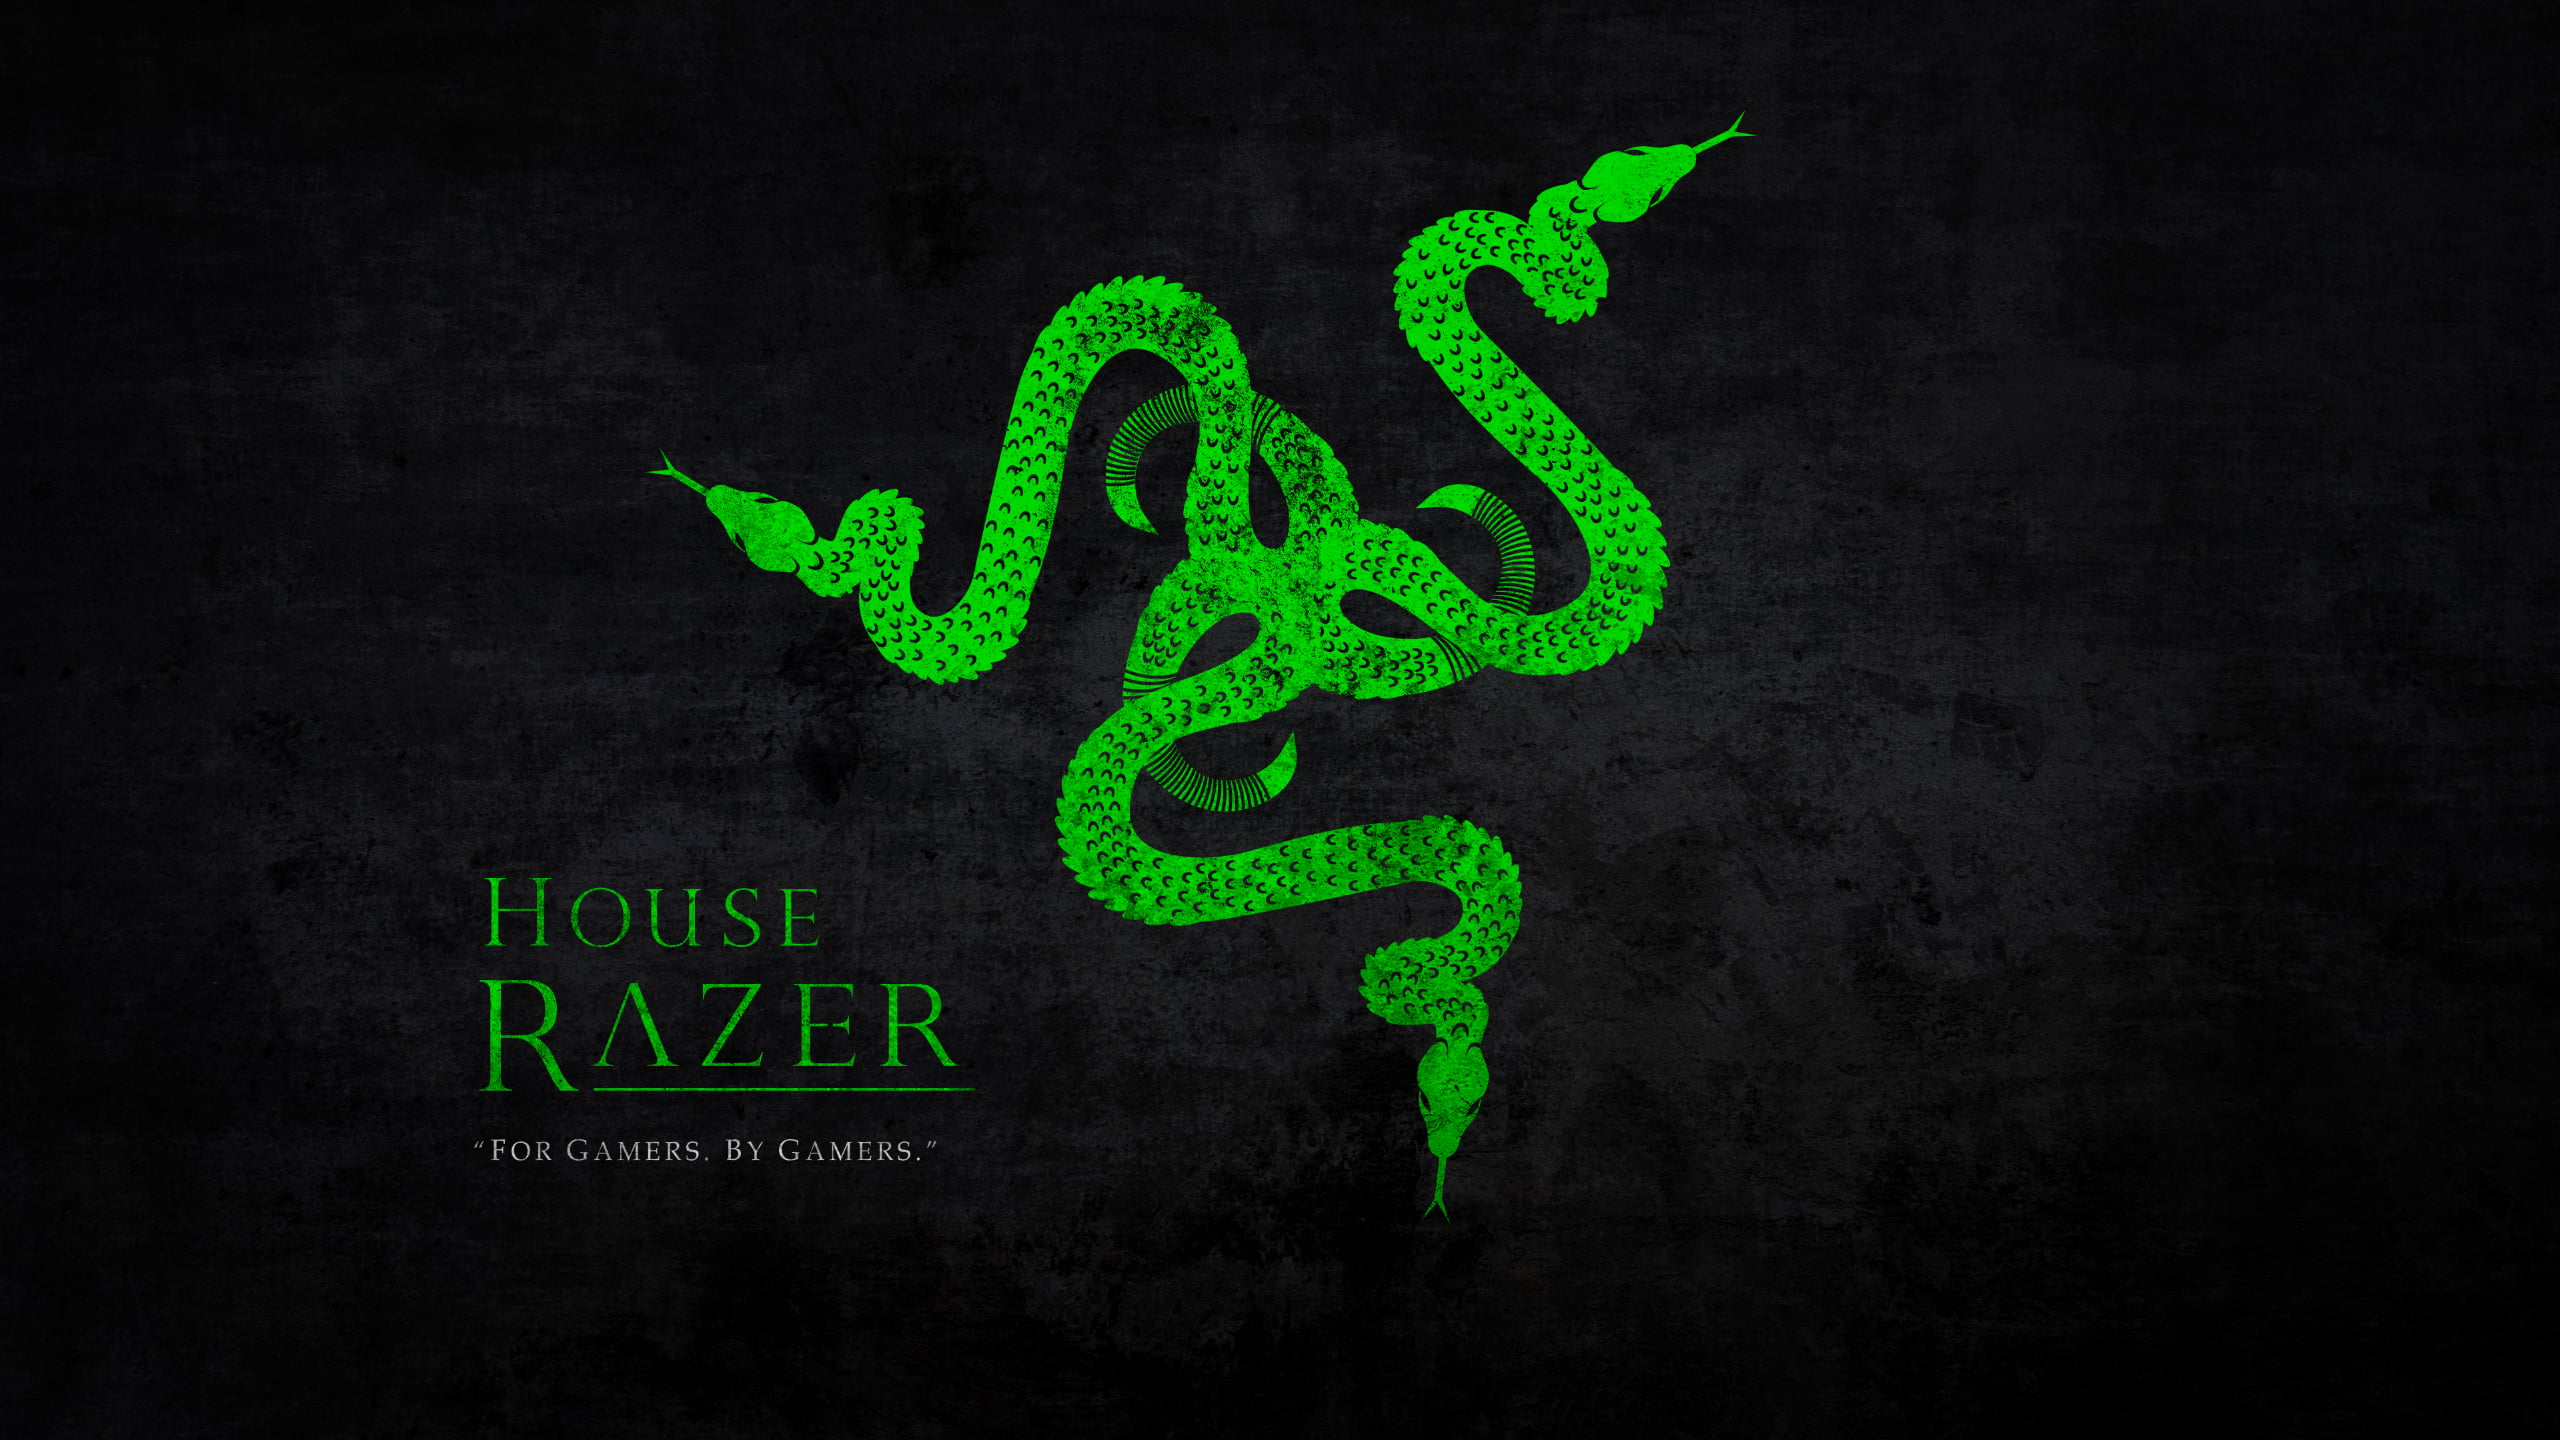 Razer logo, 2K, Razer, Razer Inc., green